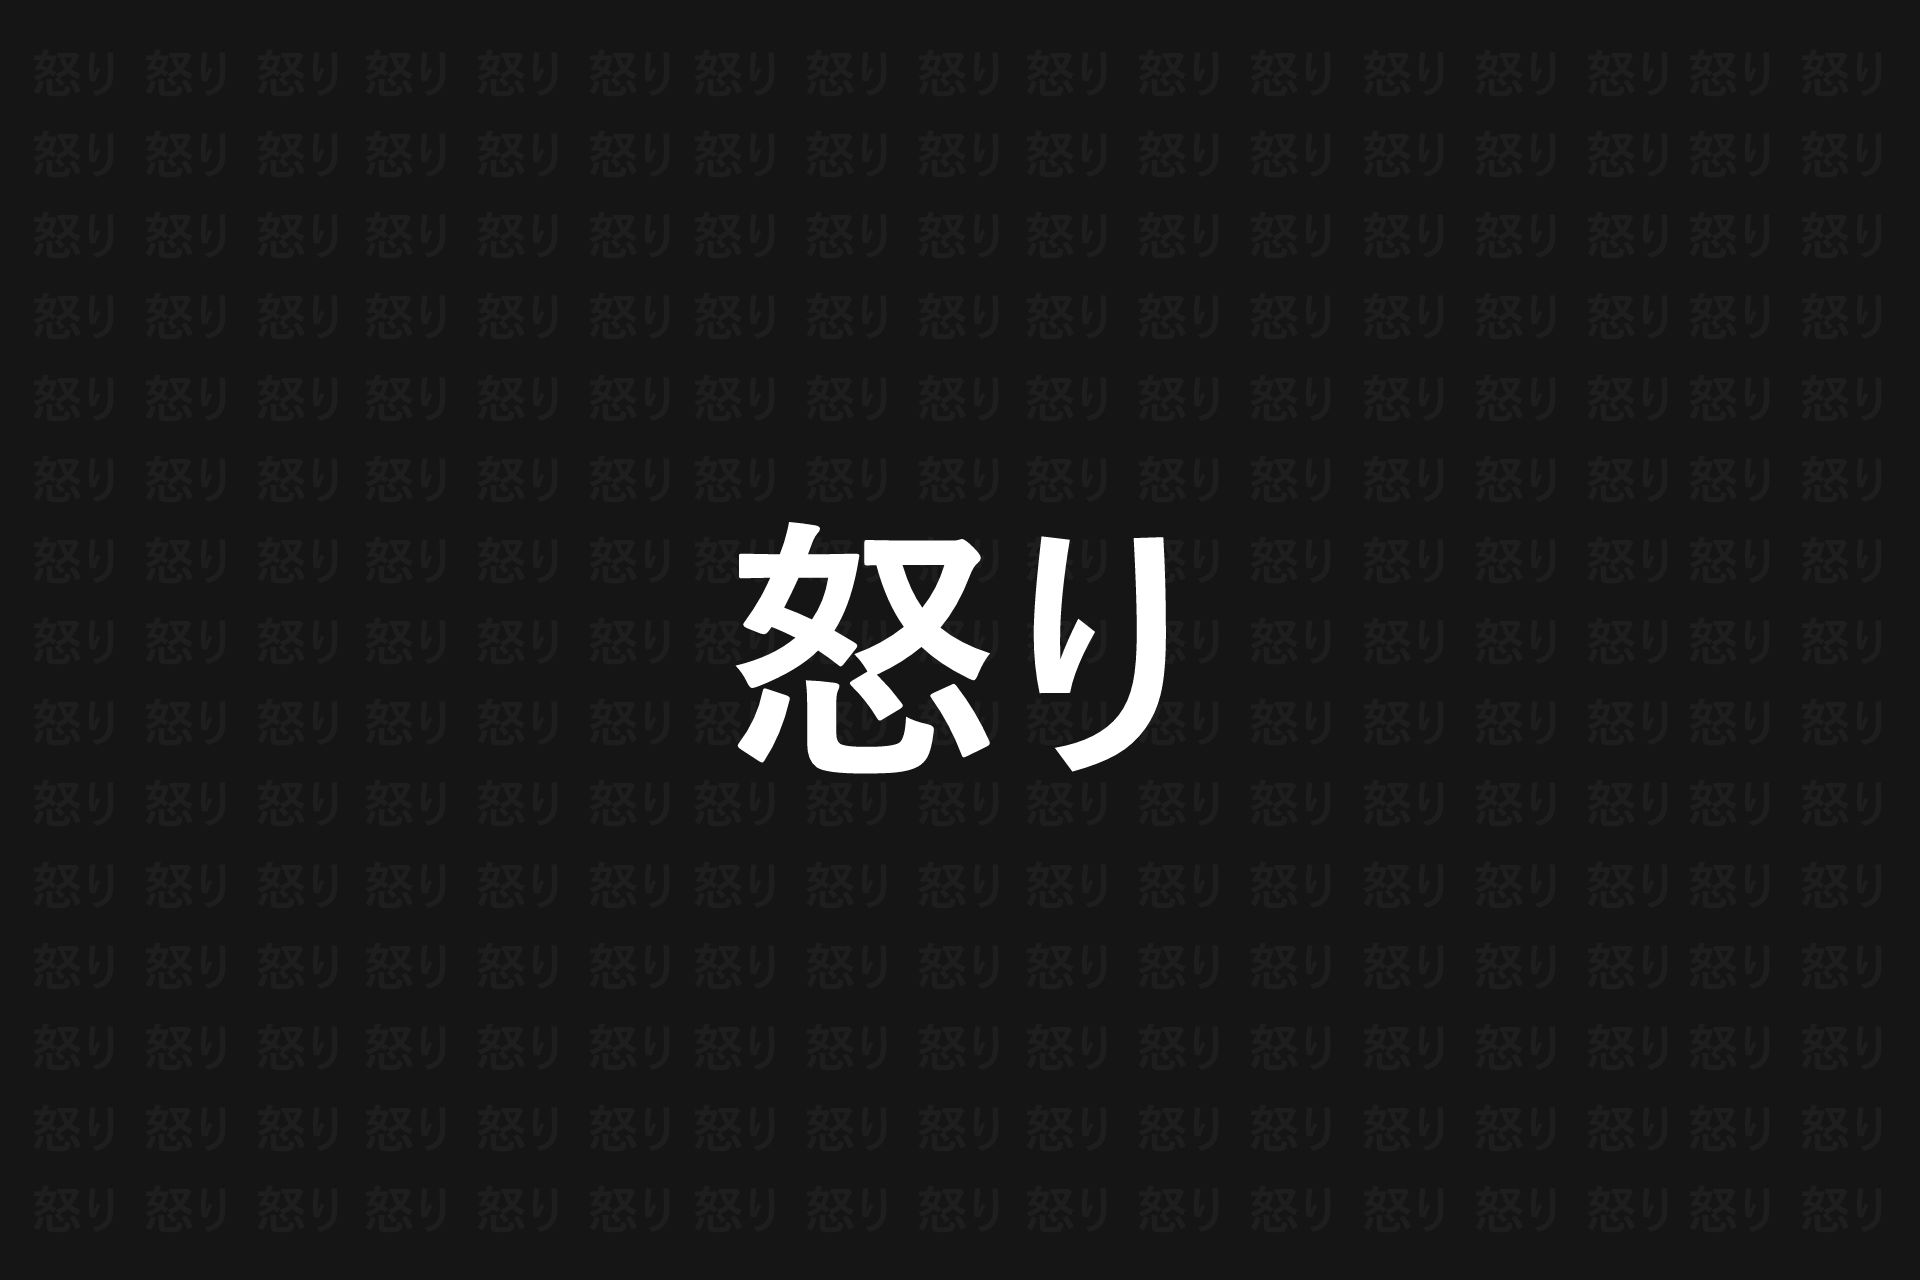 artistic, typography, japanese, kanji